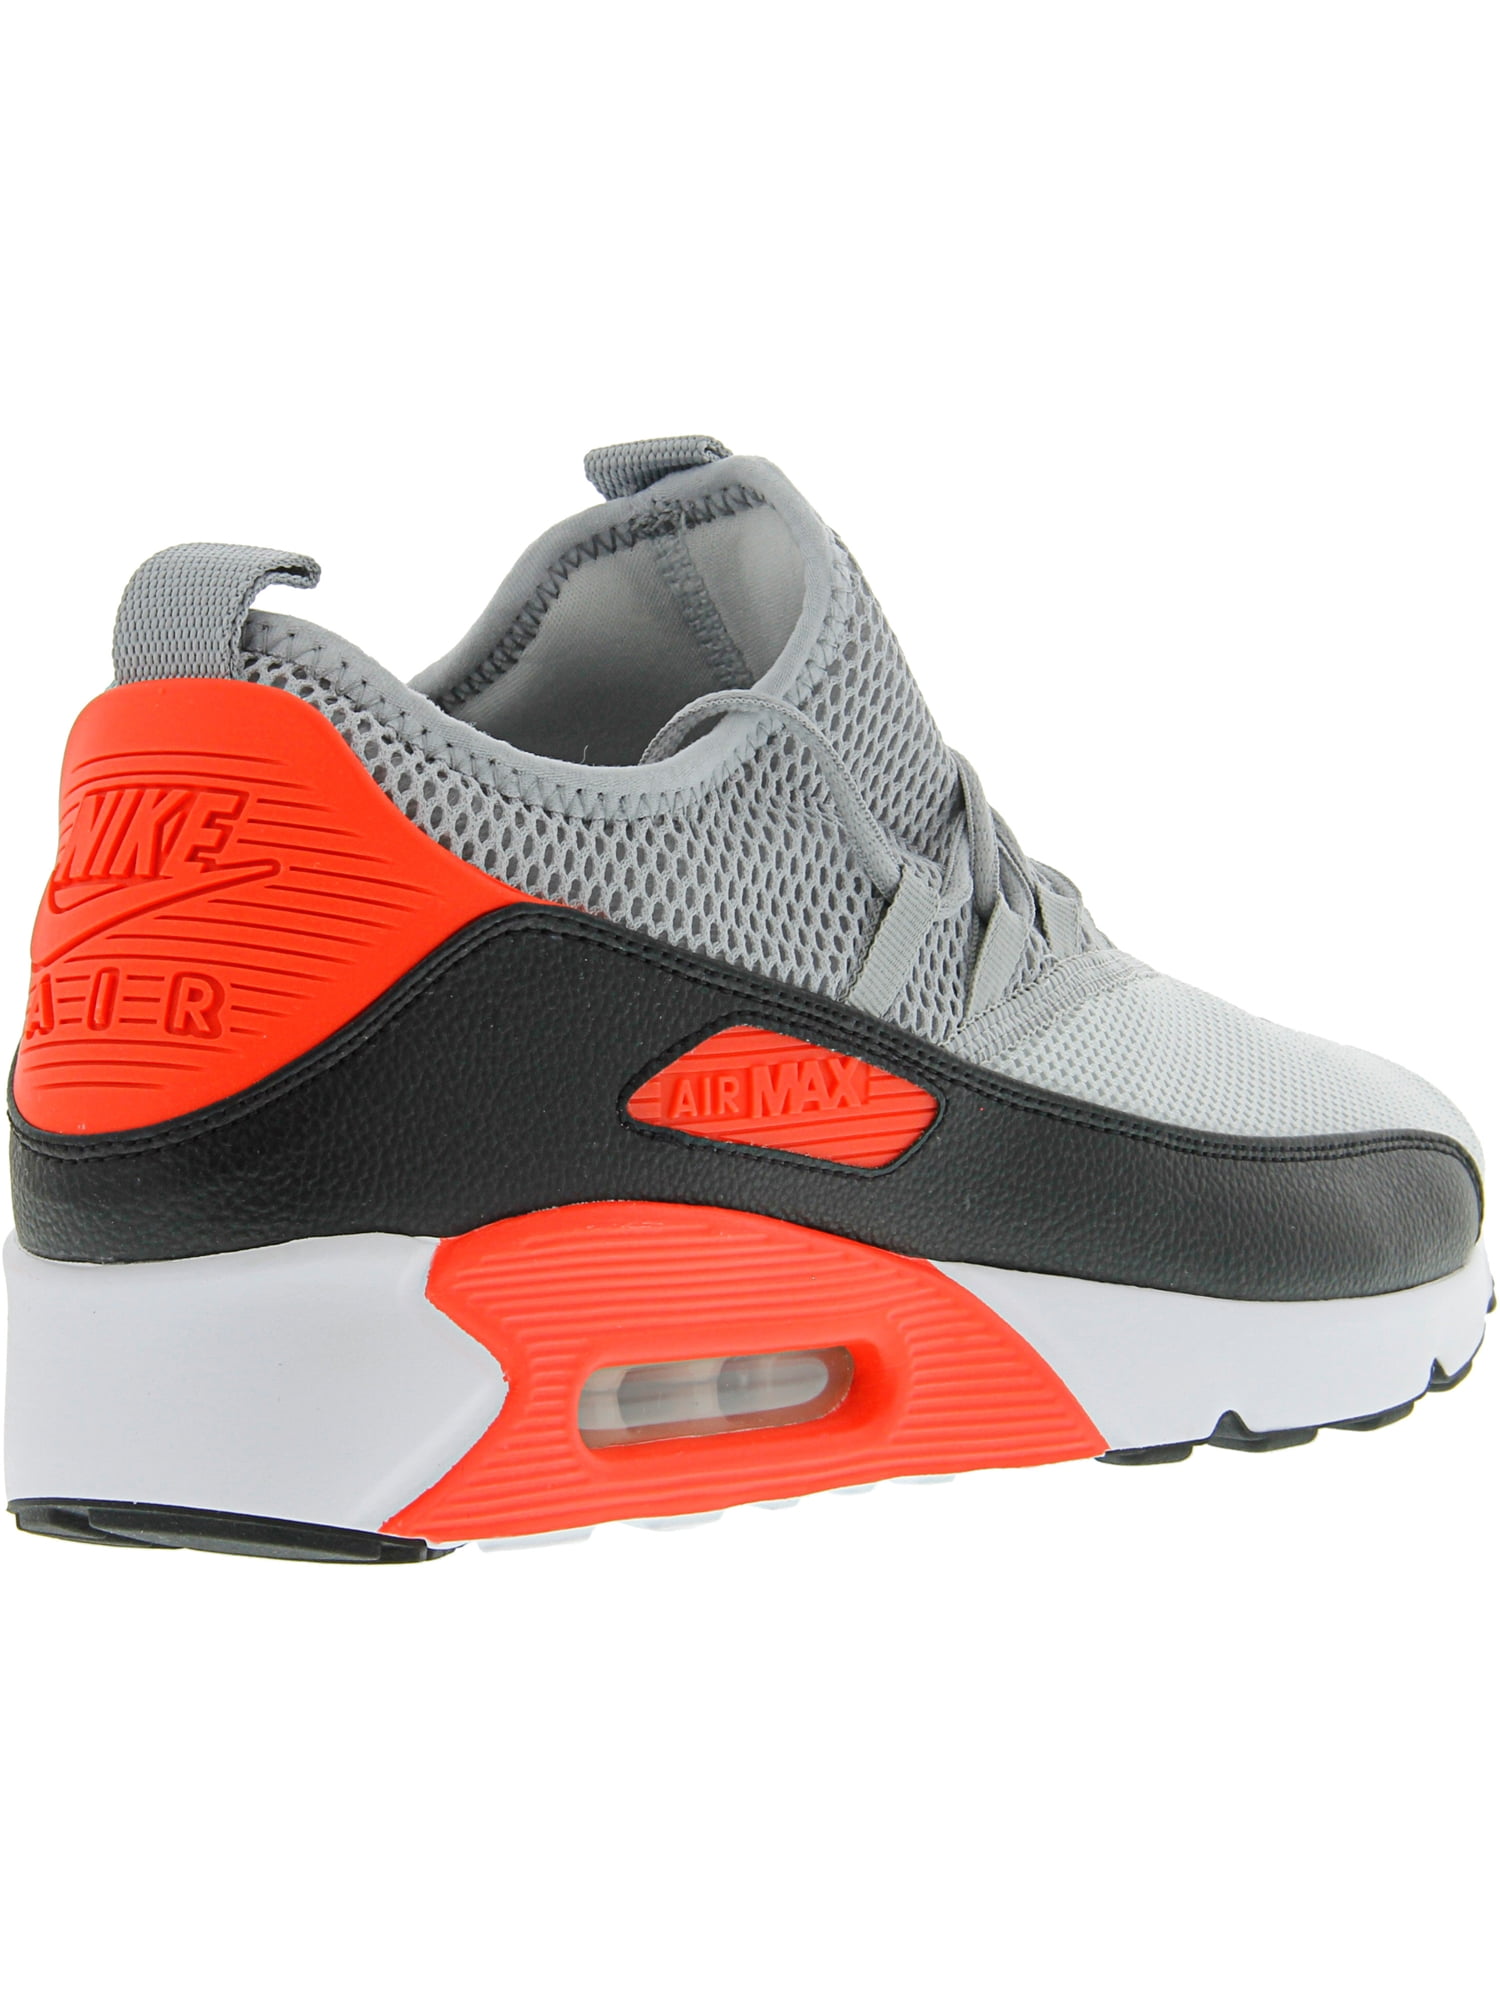 Nike Men's Air Max 90 Ez Pure Platinum / Wolf Grey - Black Ankle-High Walking Shoe - Walmart.com